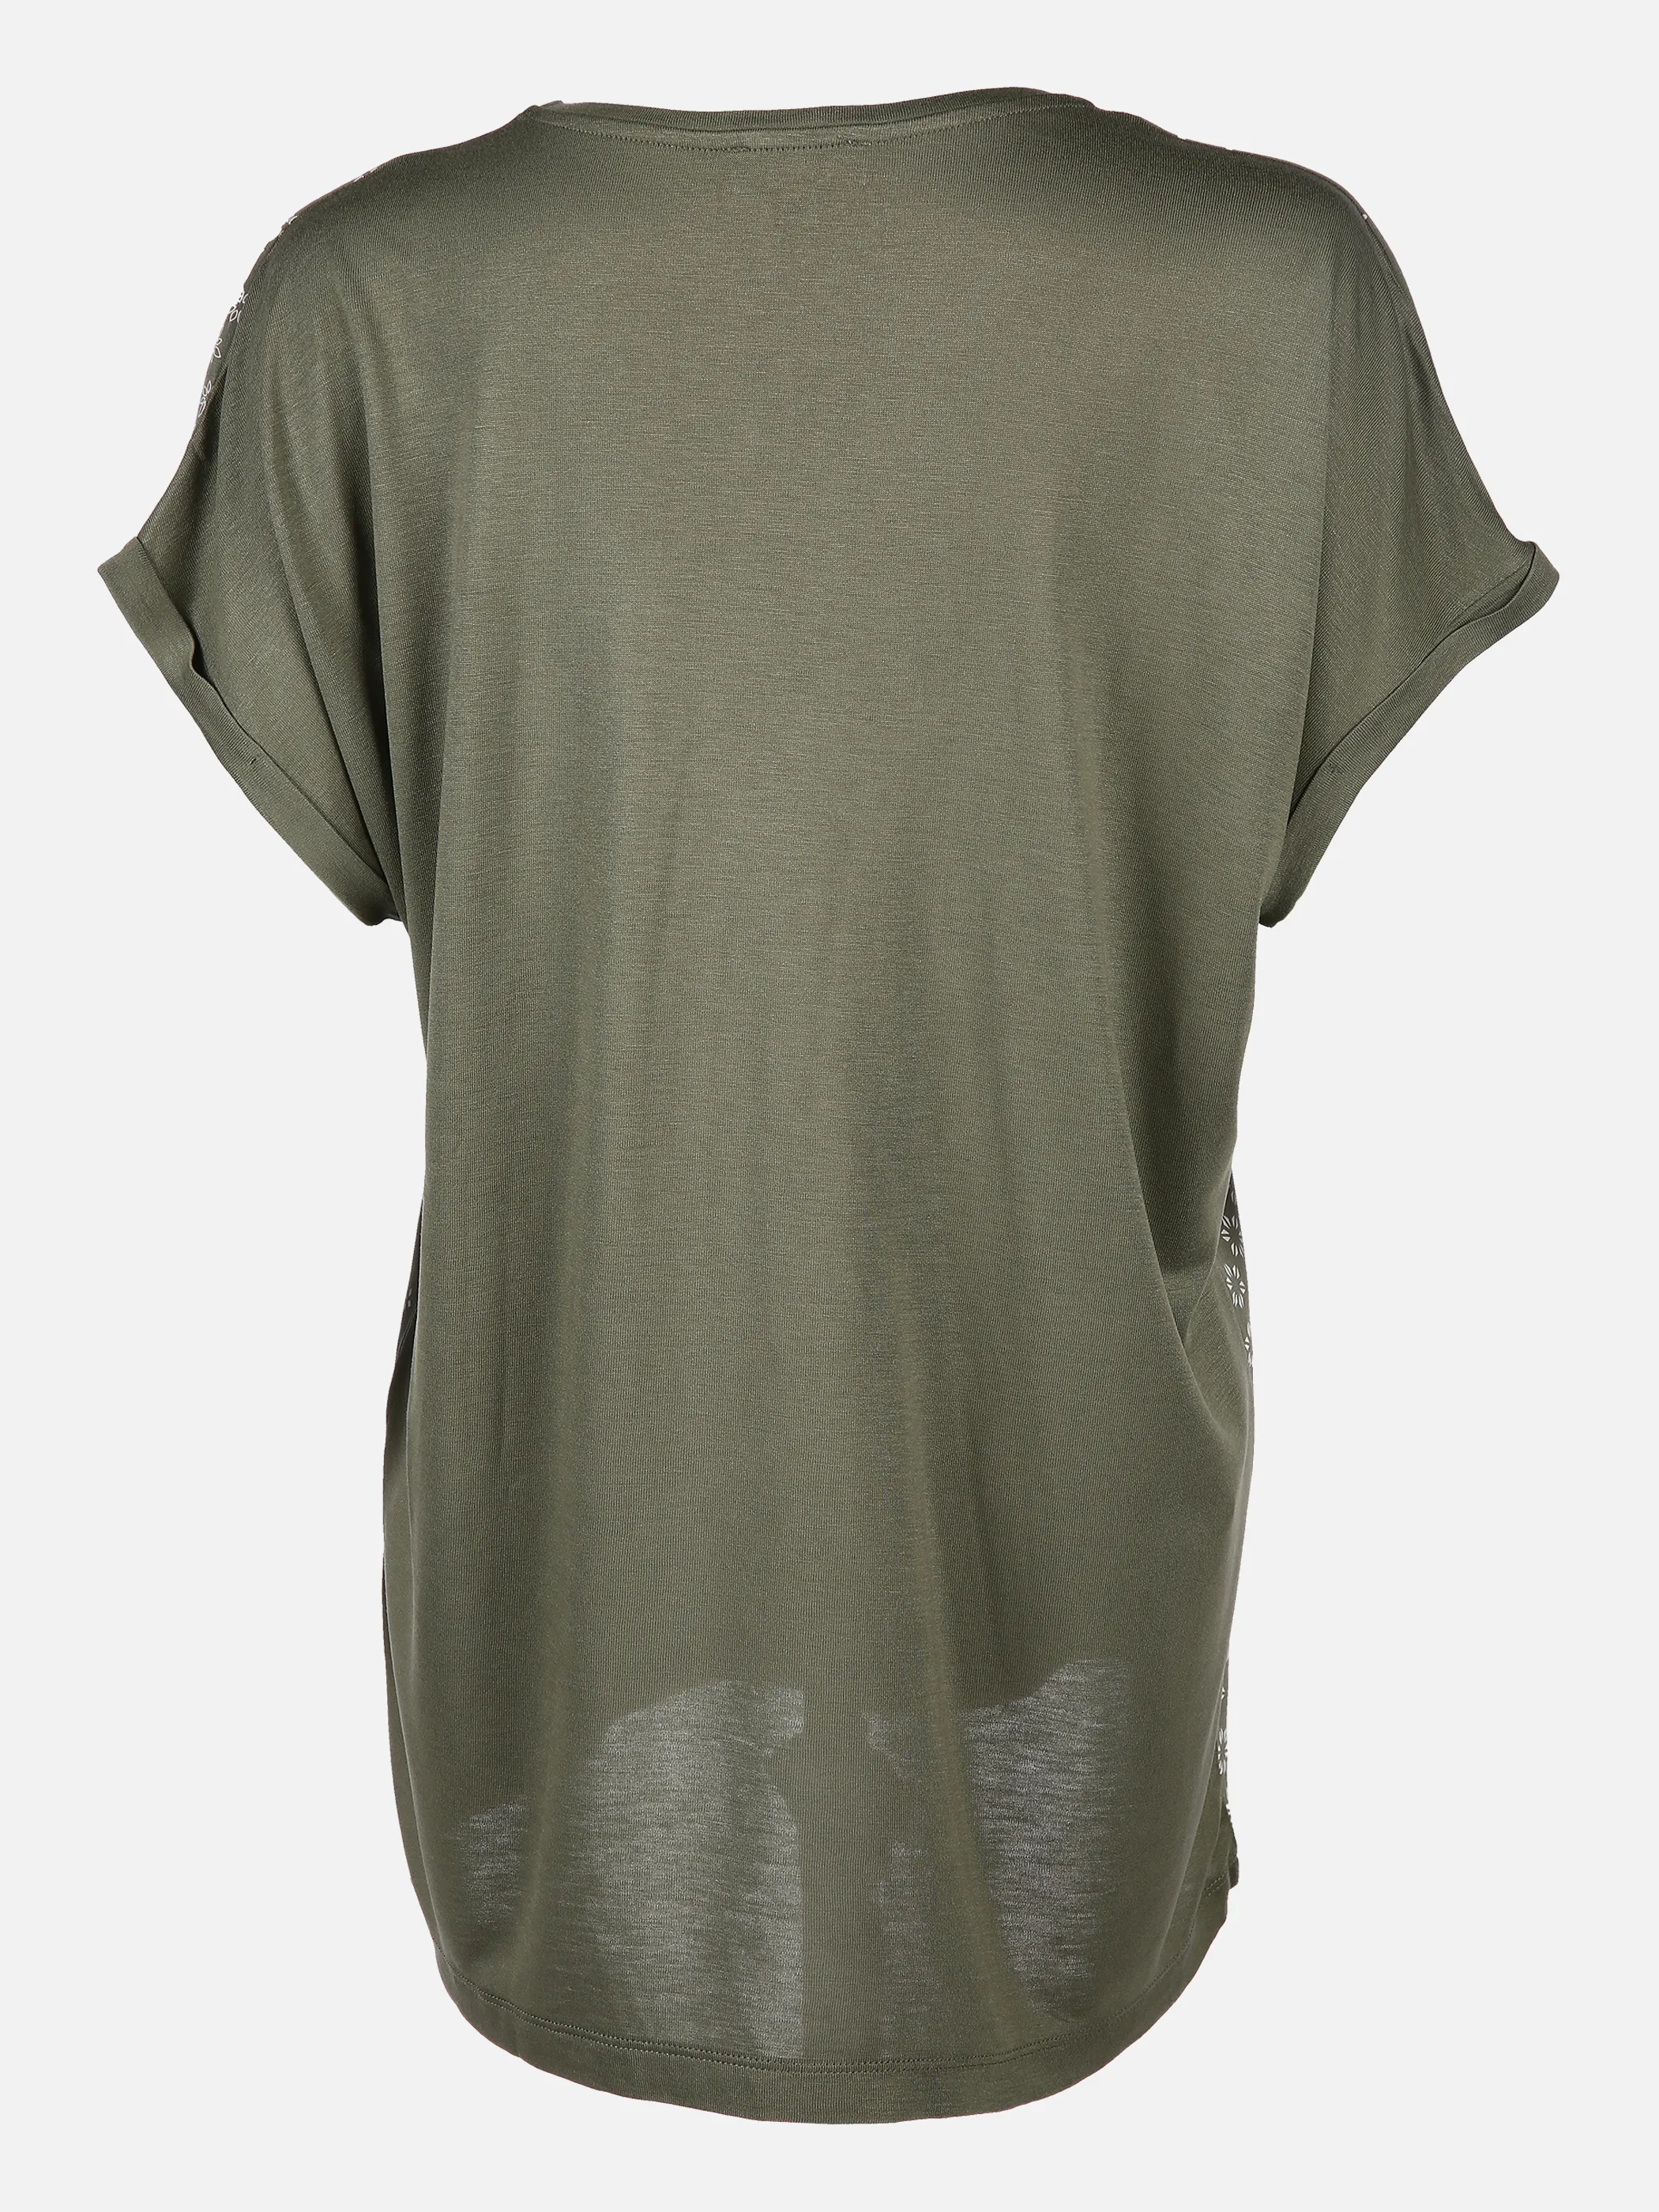 Sure Da-Materialmix-T-Shirt Grün 836705 OLIVE/WHIT 2